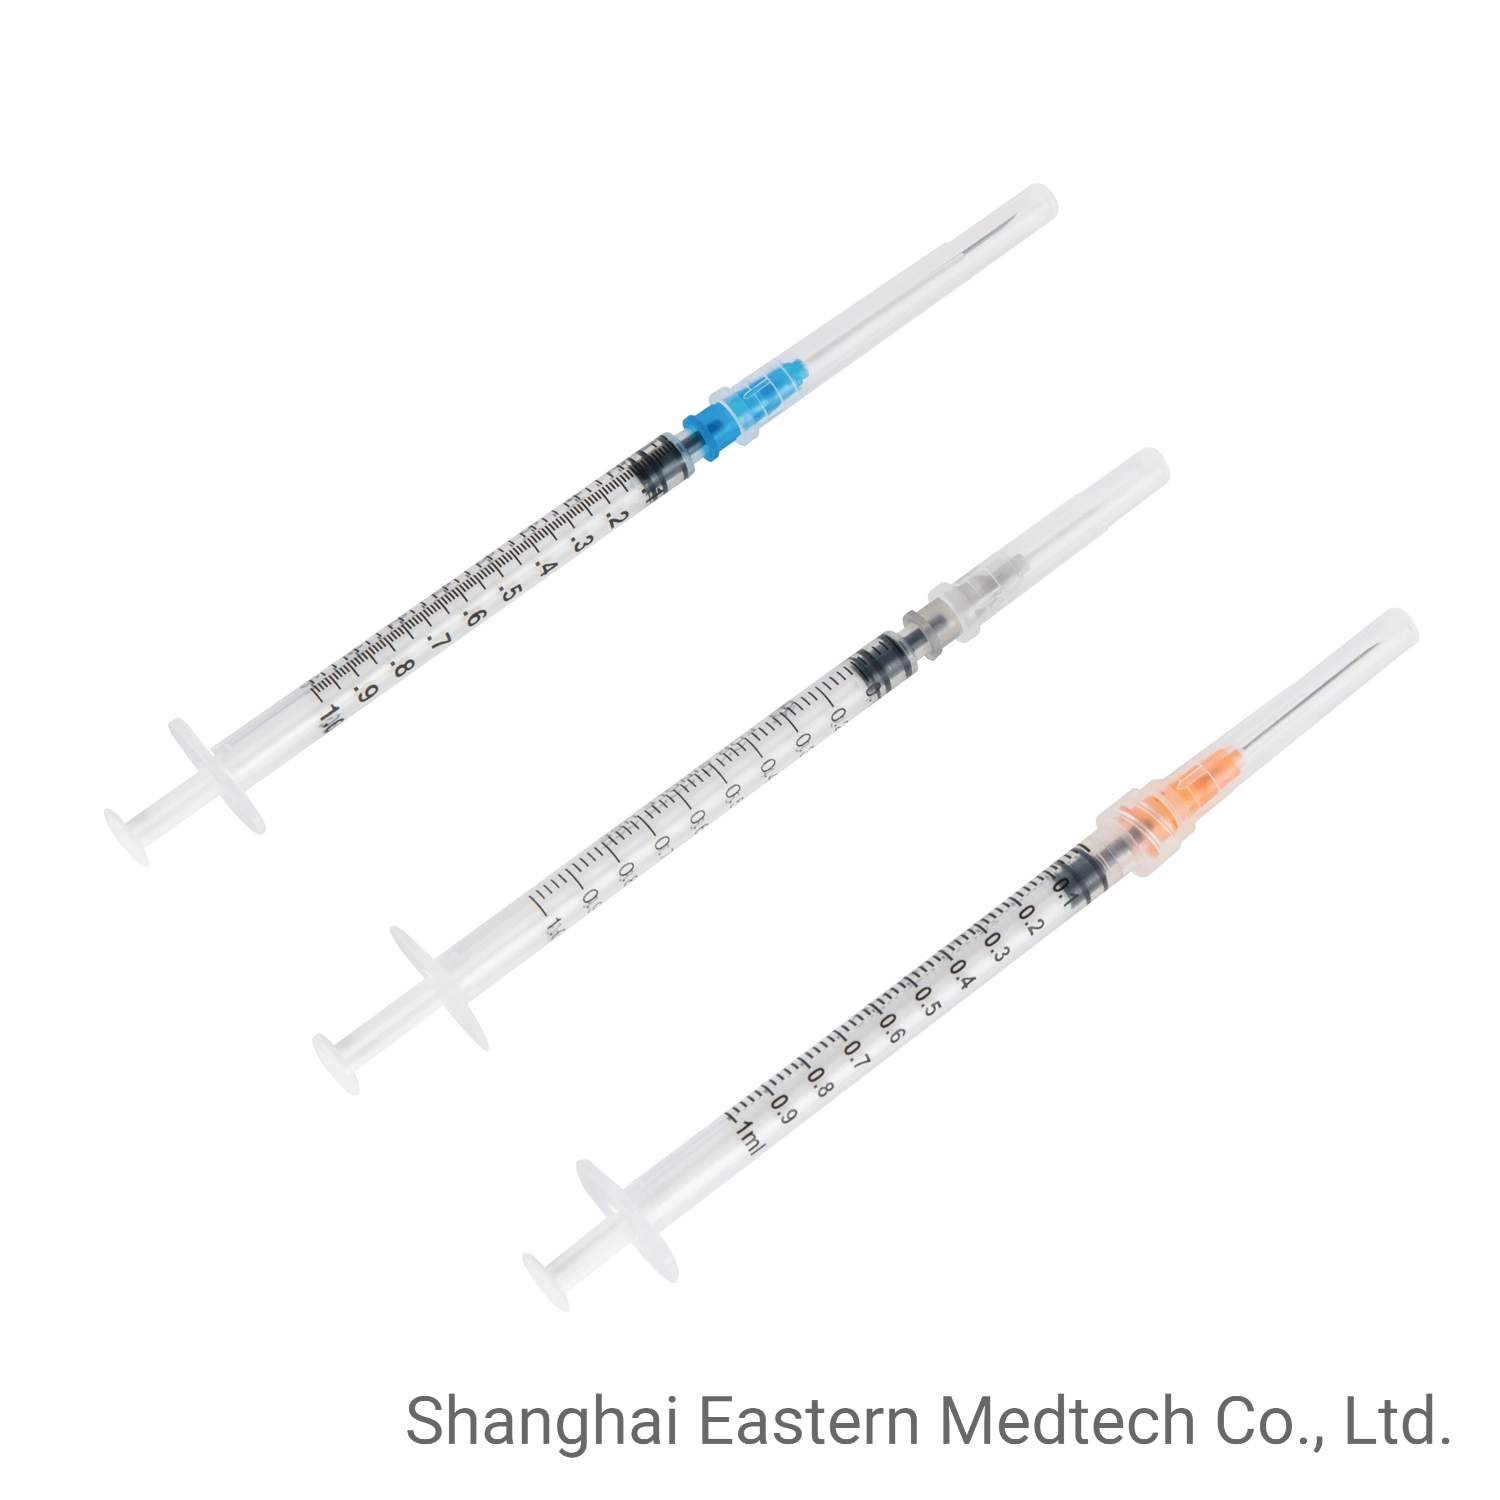 China Wholesale/Supplier Medical Supply Professional Syringe Manufacturer Low Dead Space Needle Mounted 1ml 3-Part Syringe Vaccine Syringe